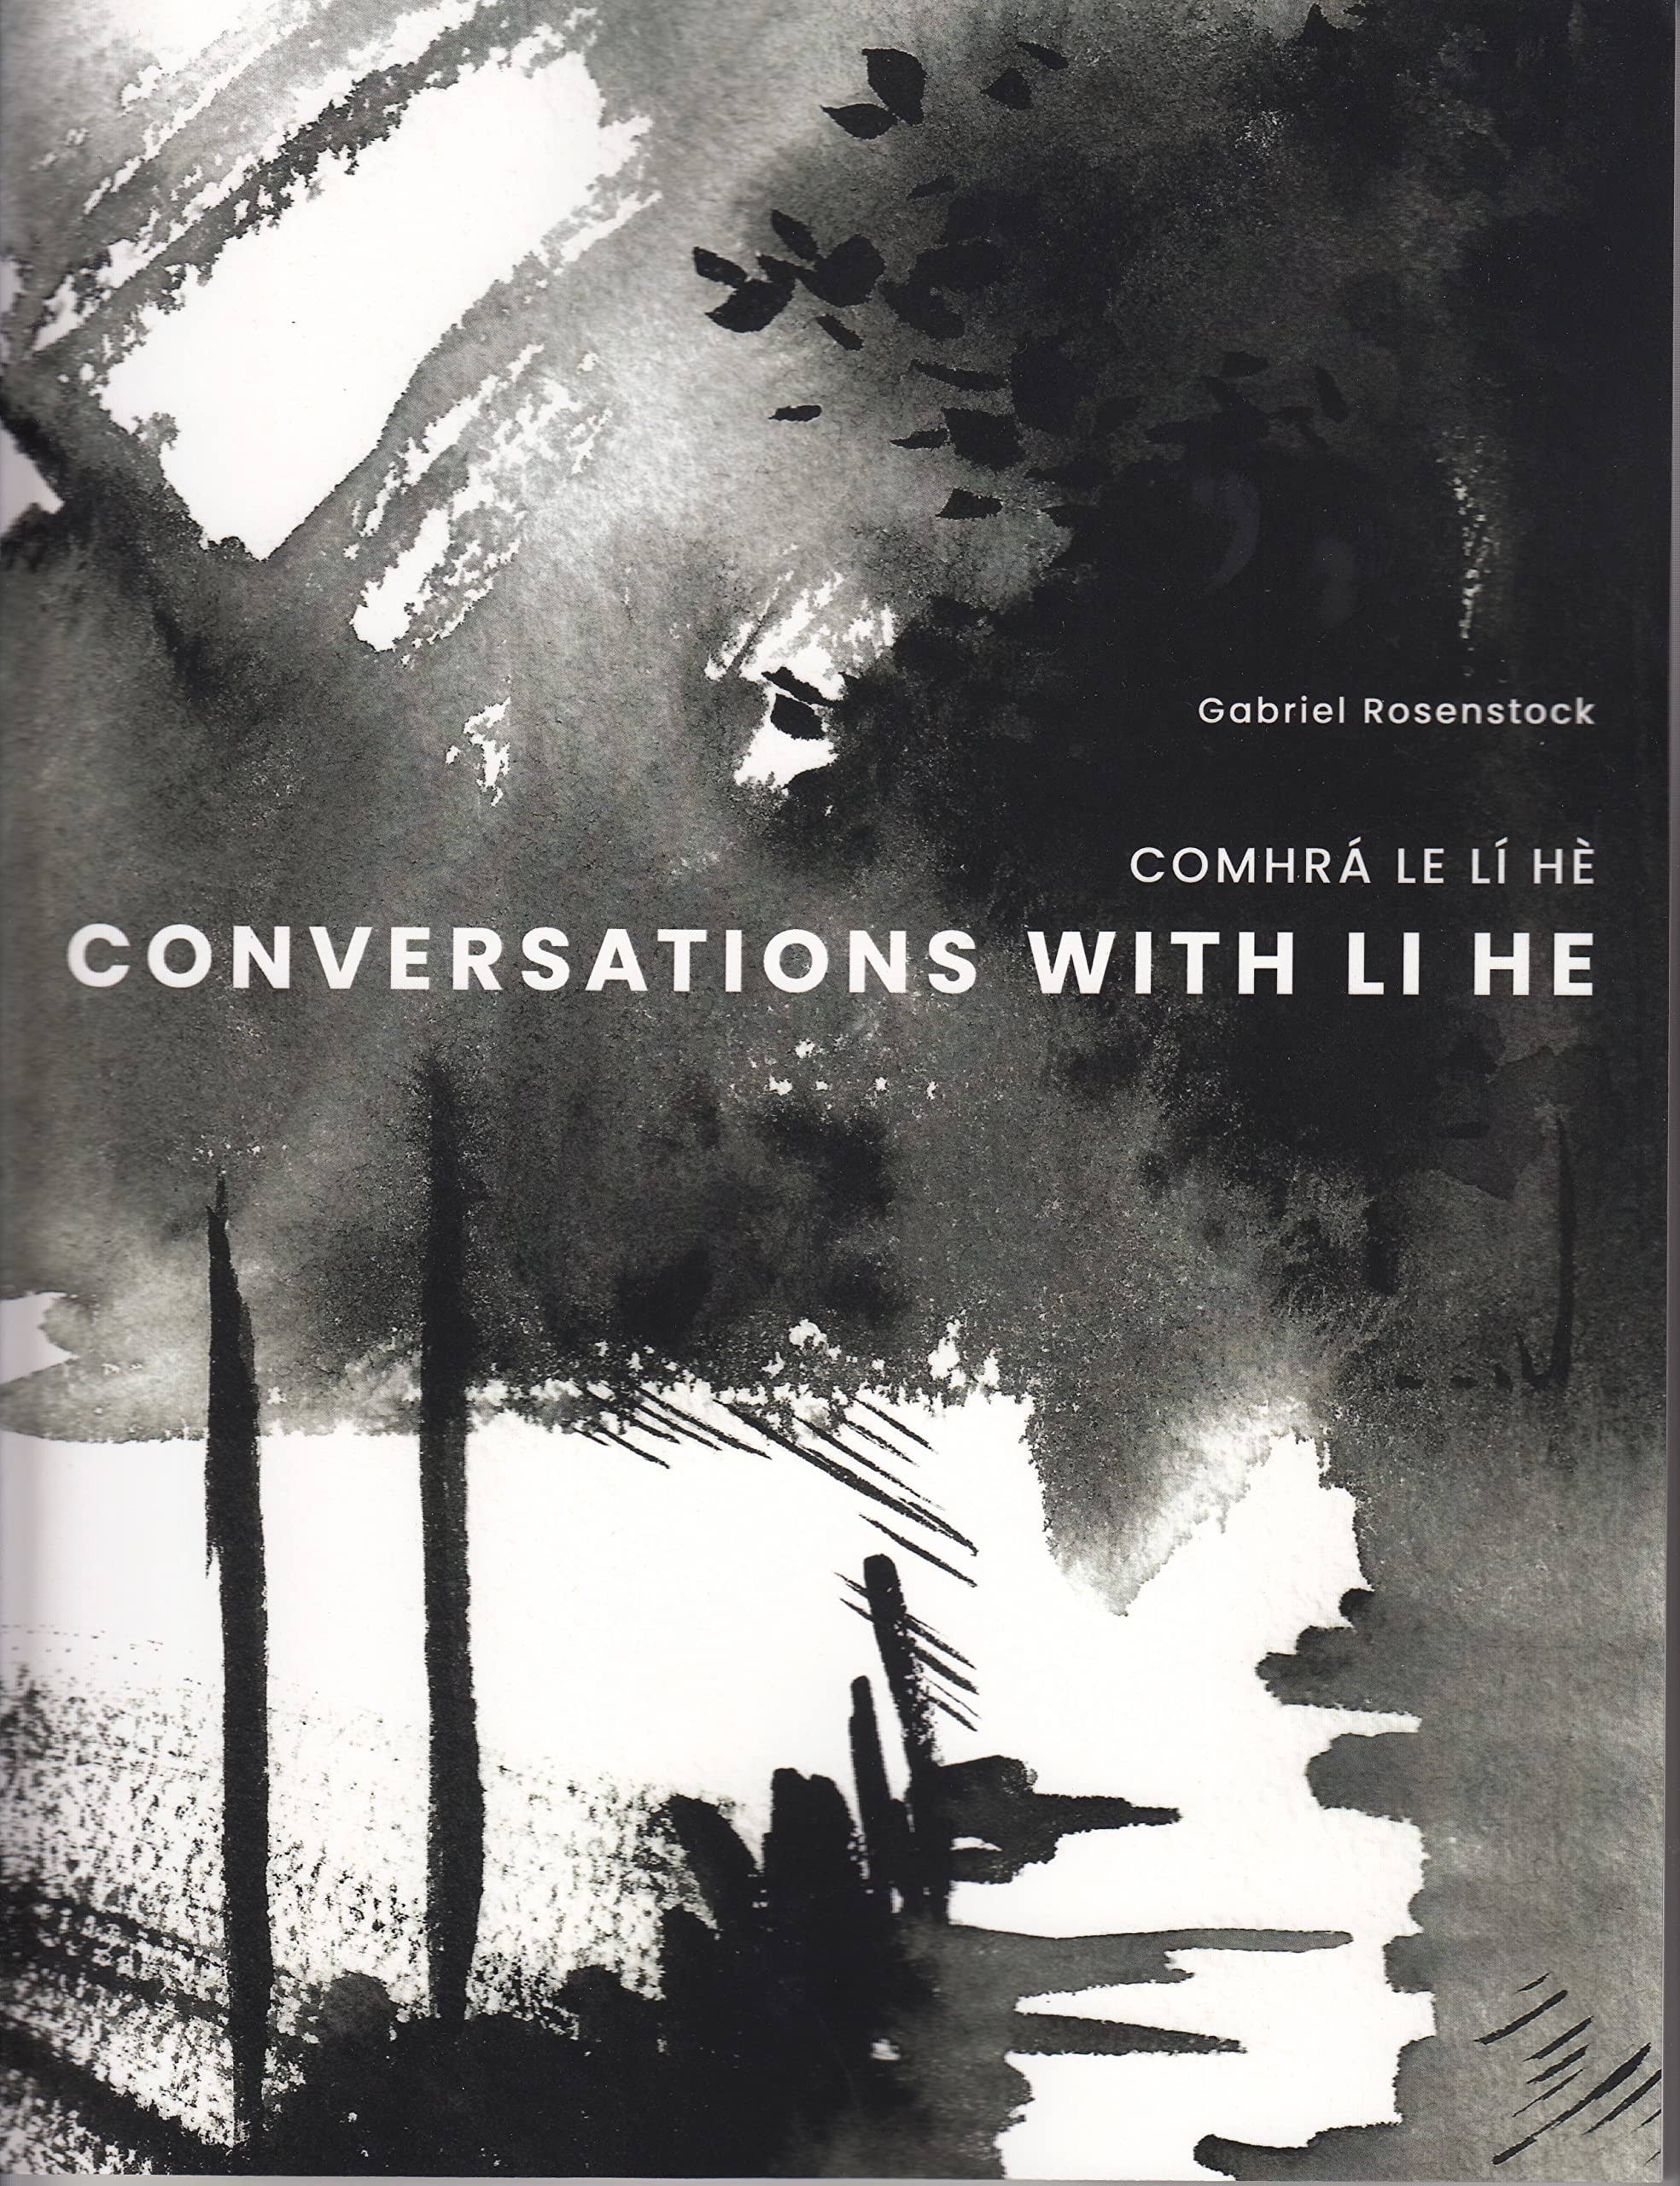 Conversations with Li He by Gabriel Rosenstock